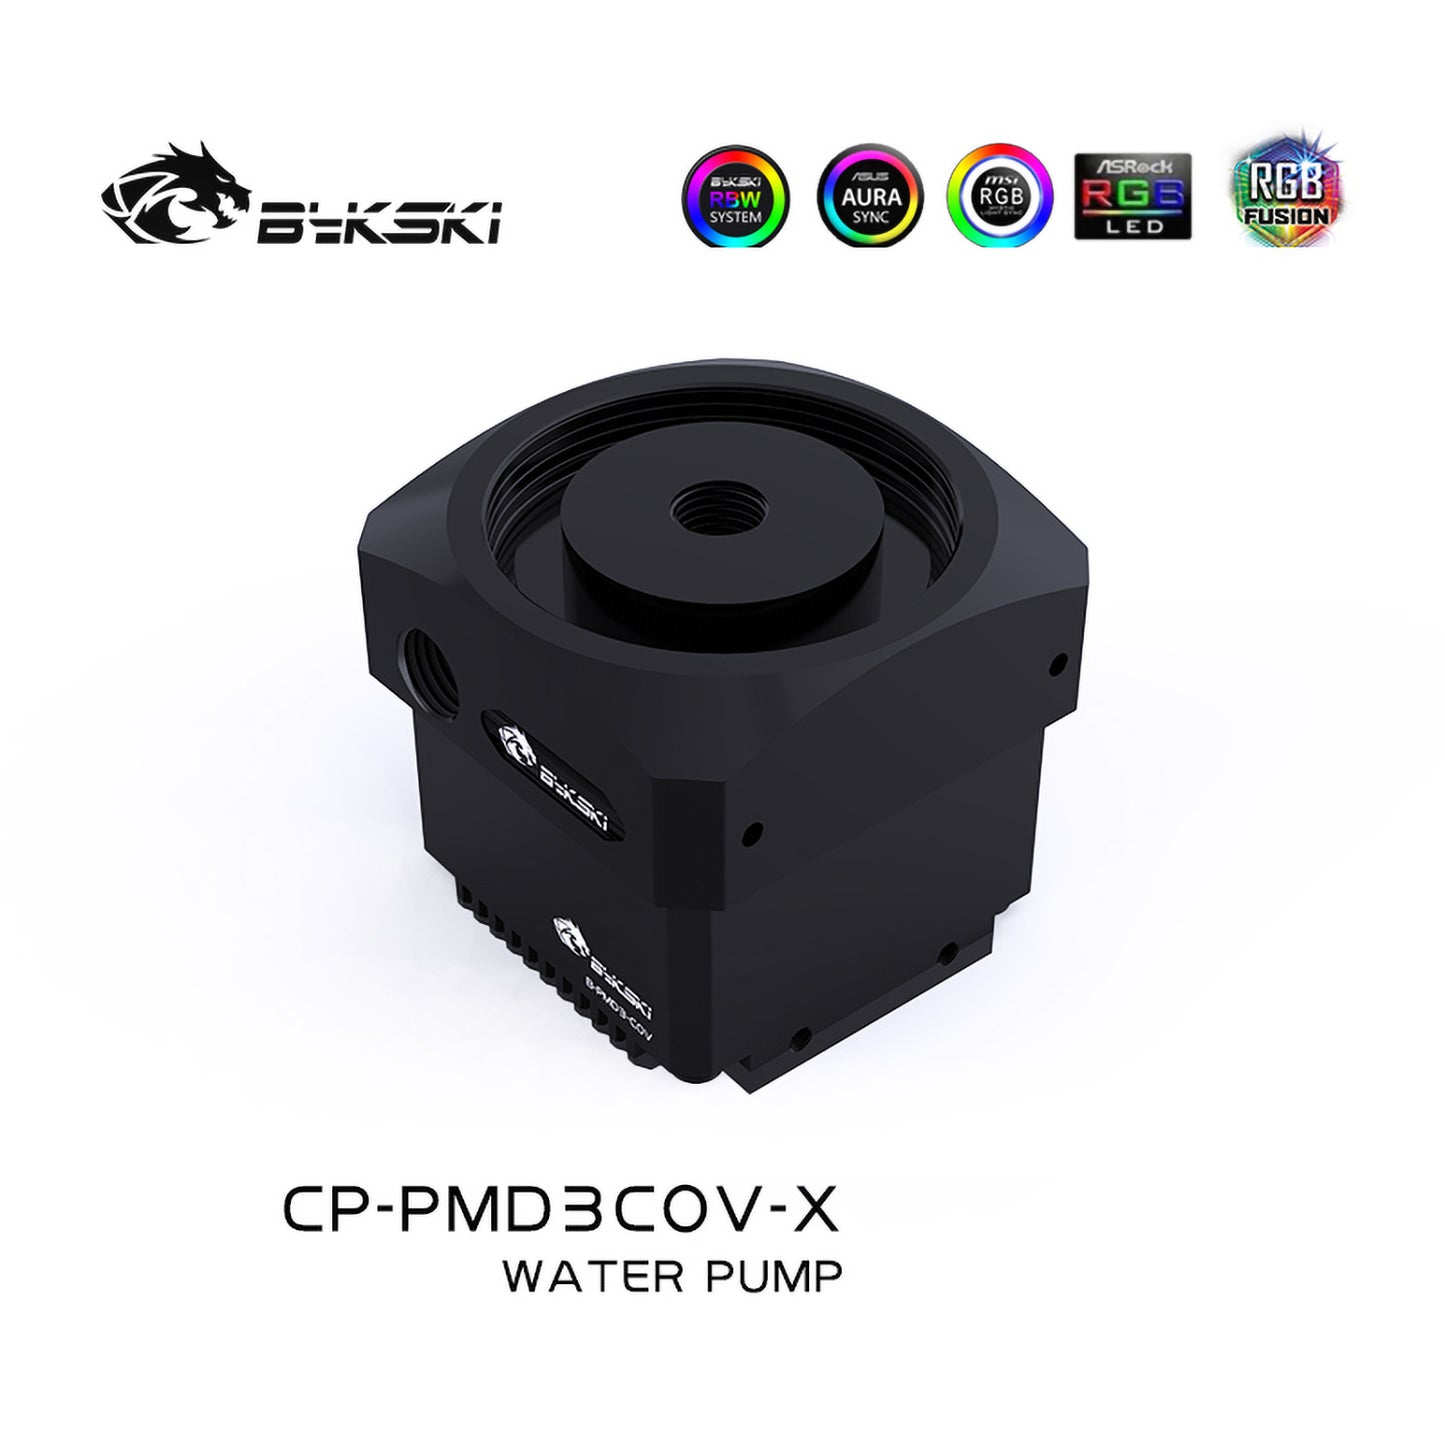 Bykski PWM DDC Pump, Maximum Flow 700L/H, Maximum Lift 6 Meter, PWM Control Water Cooling Pump, CP-PMD3COV-X